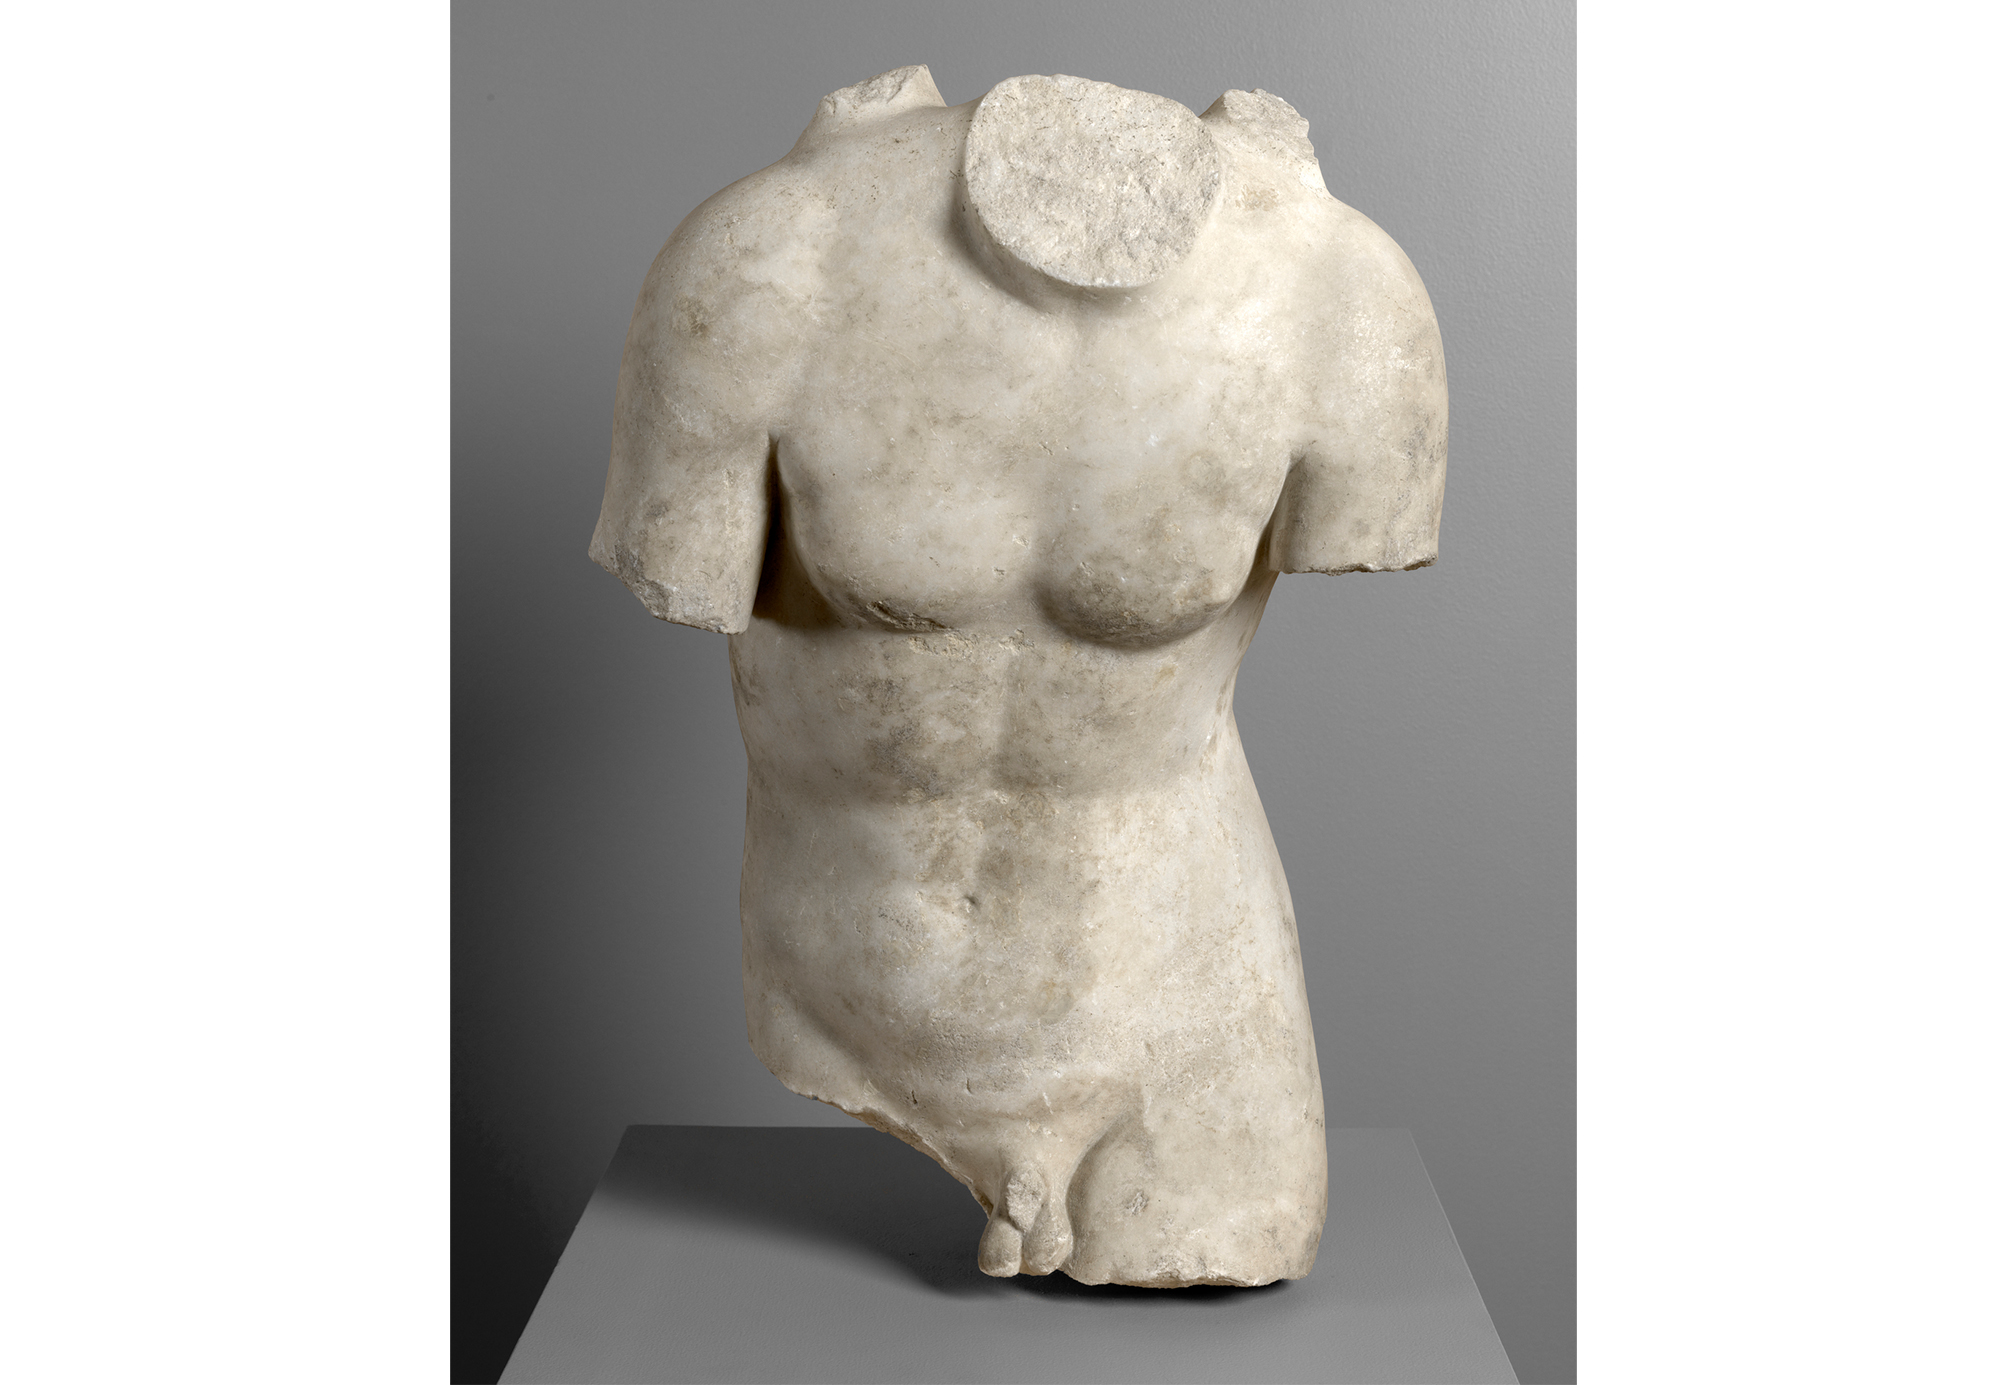 SCMA sculpture of Winged torso of Eros